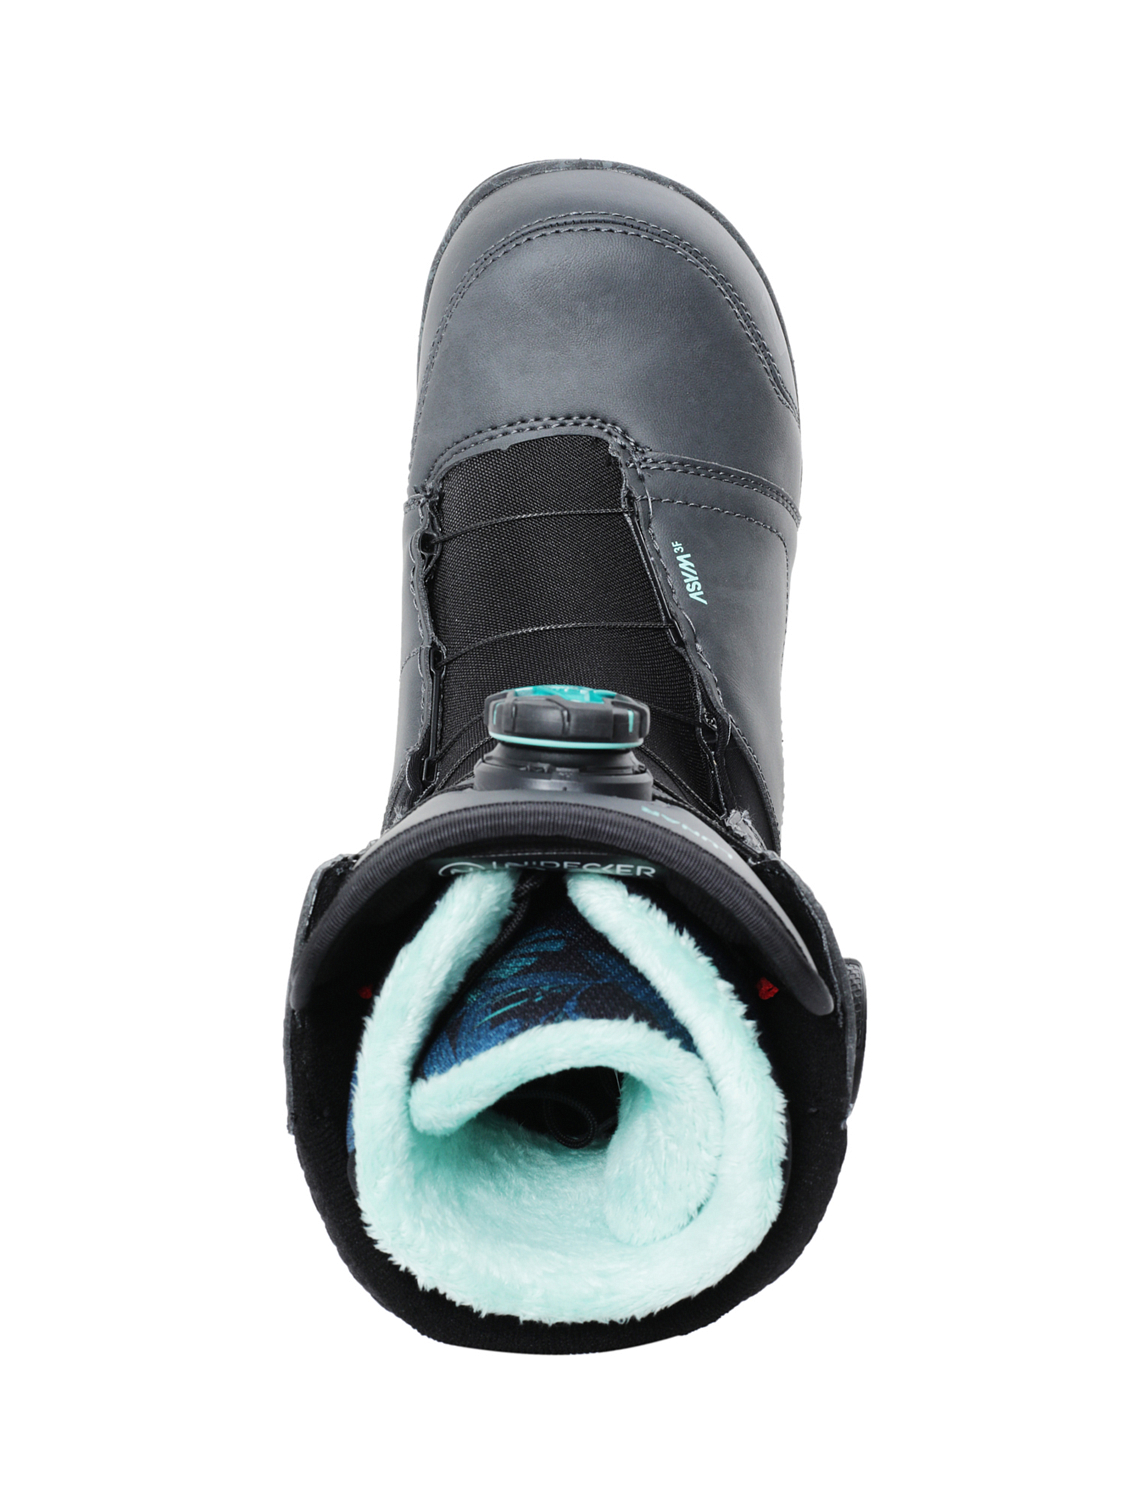 Ботинки для сноуборда NIDECKER 2020-21 Lunar Black